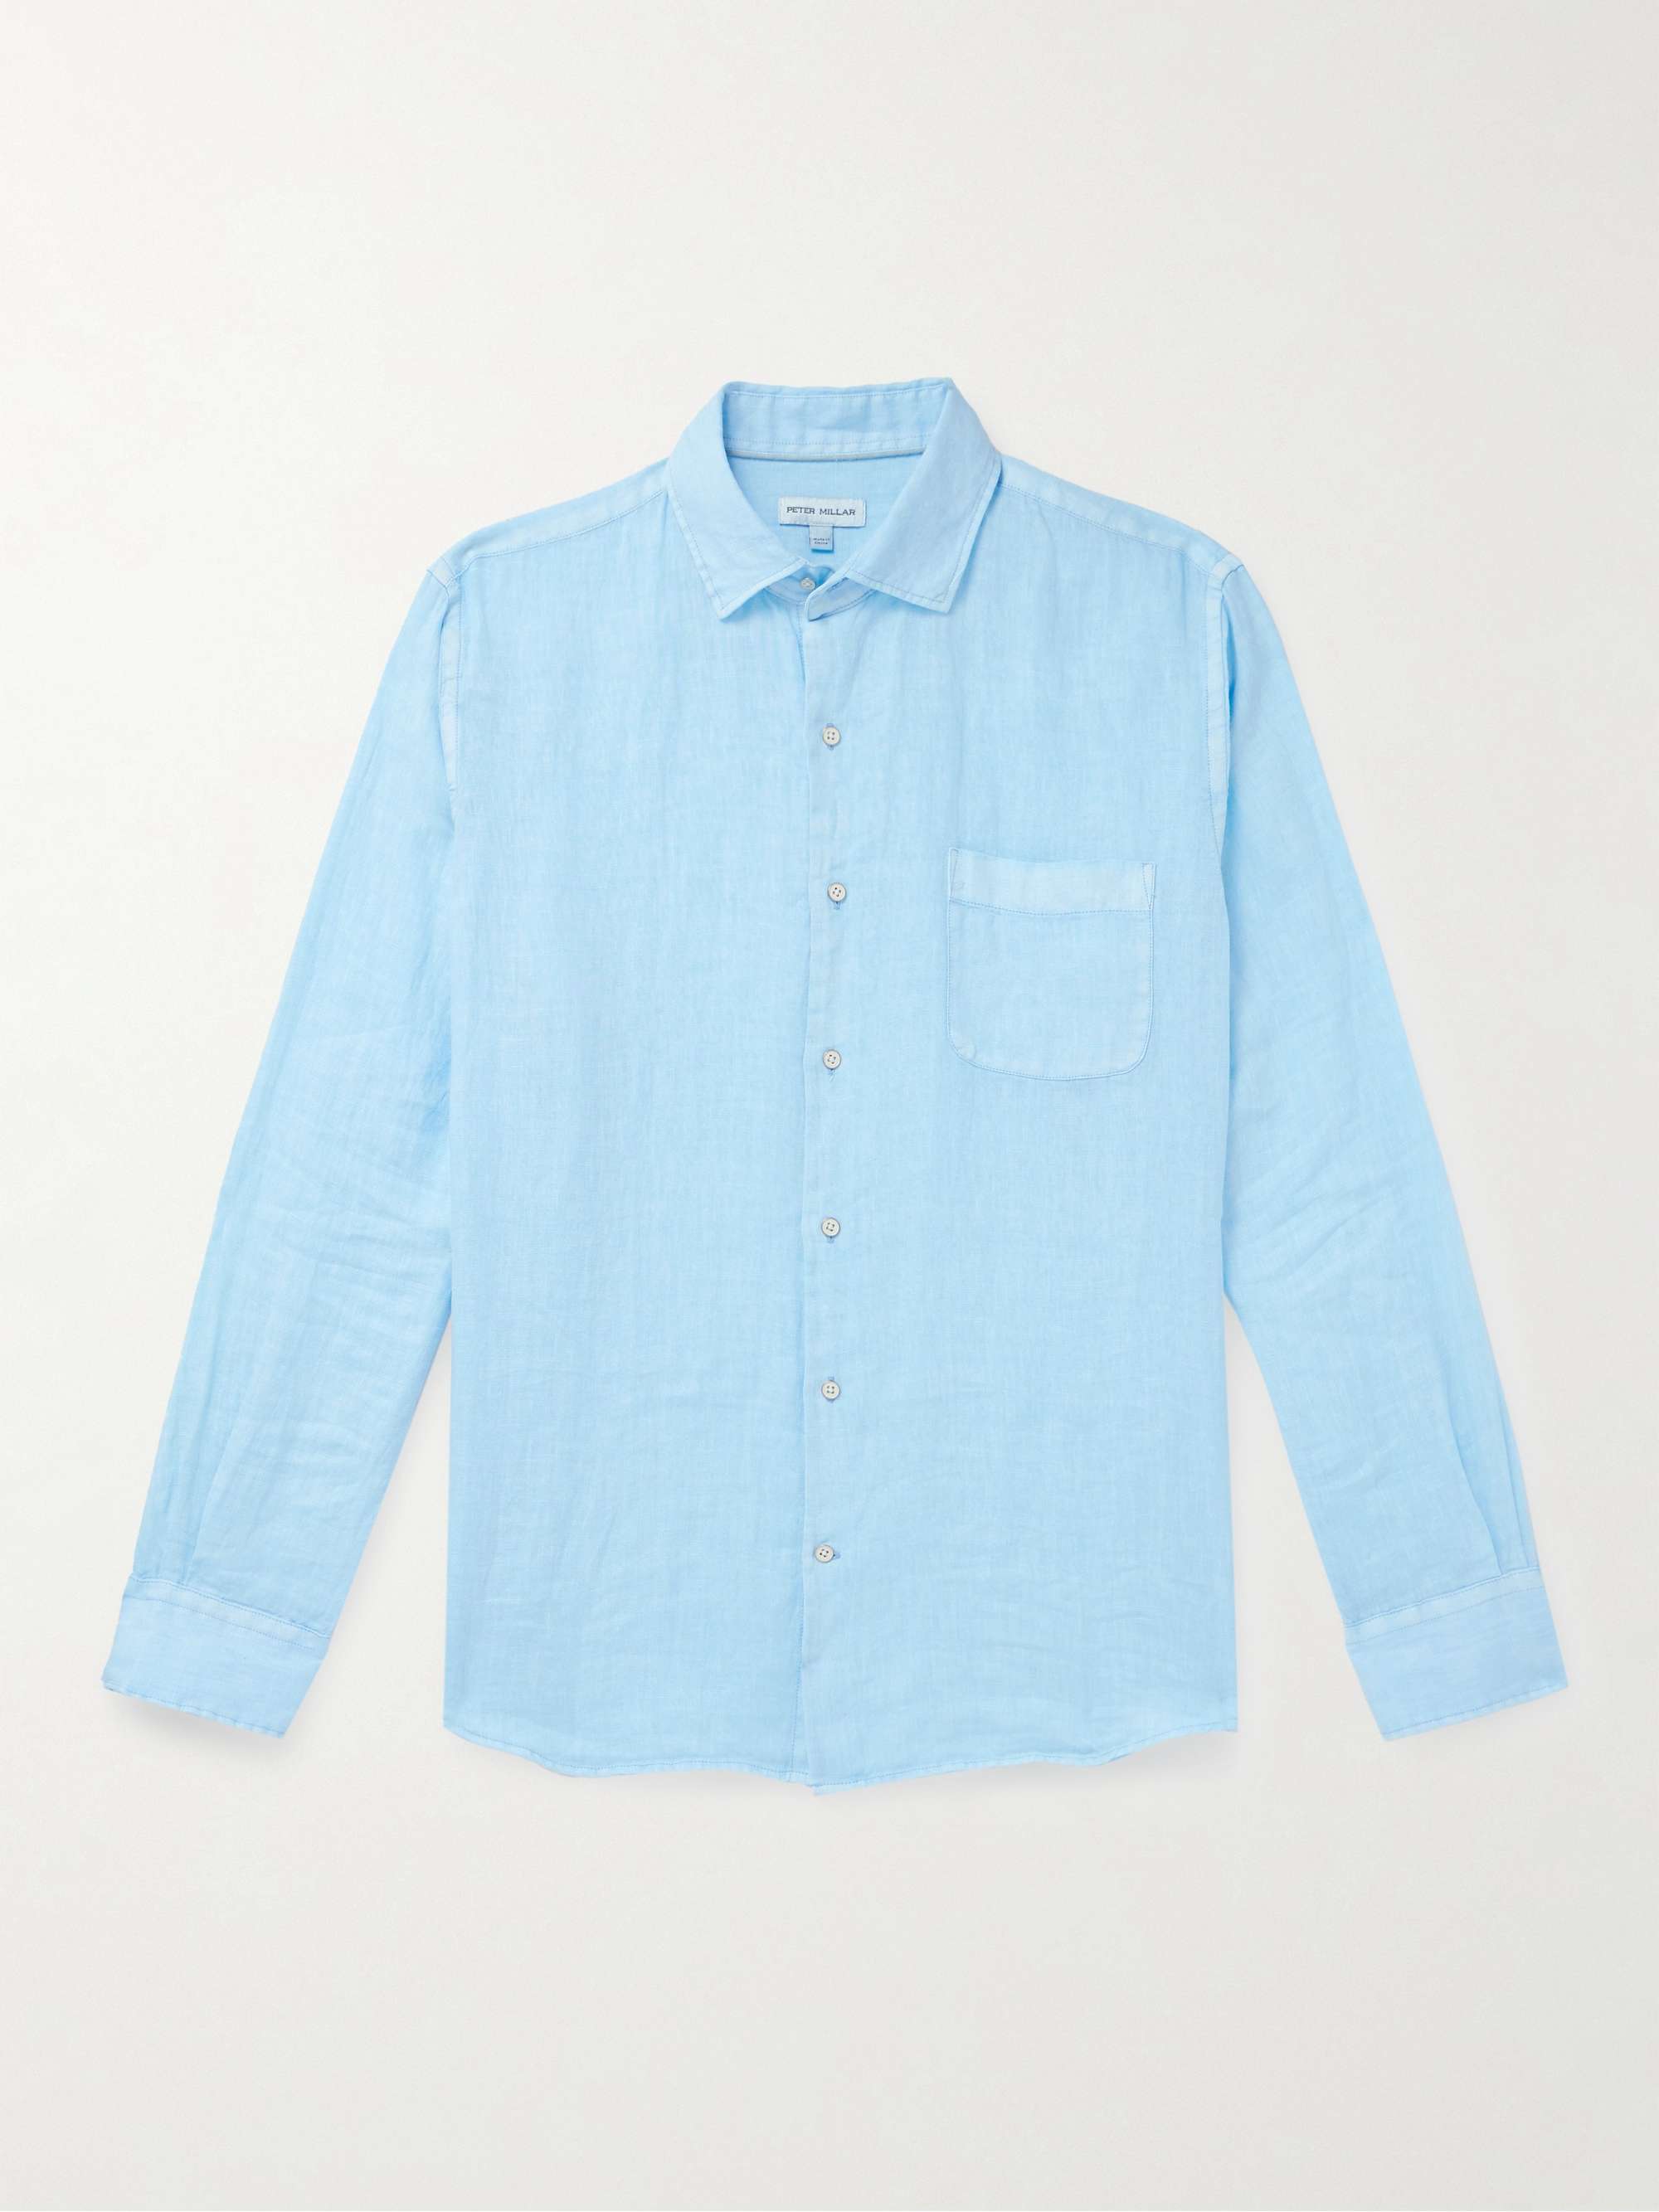 PETER MILLAR Coastal Garment-Dyed Linen Shirt for Men | MR PORTER